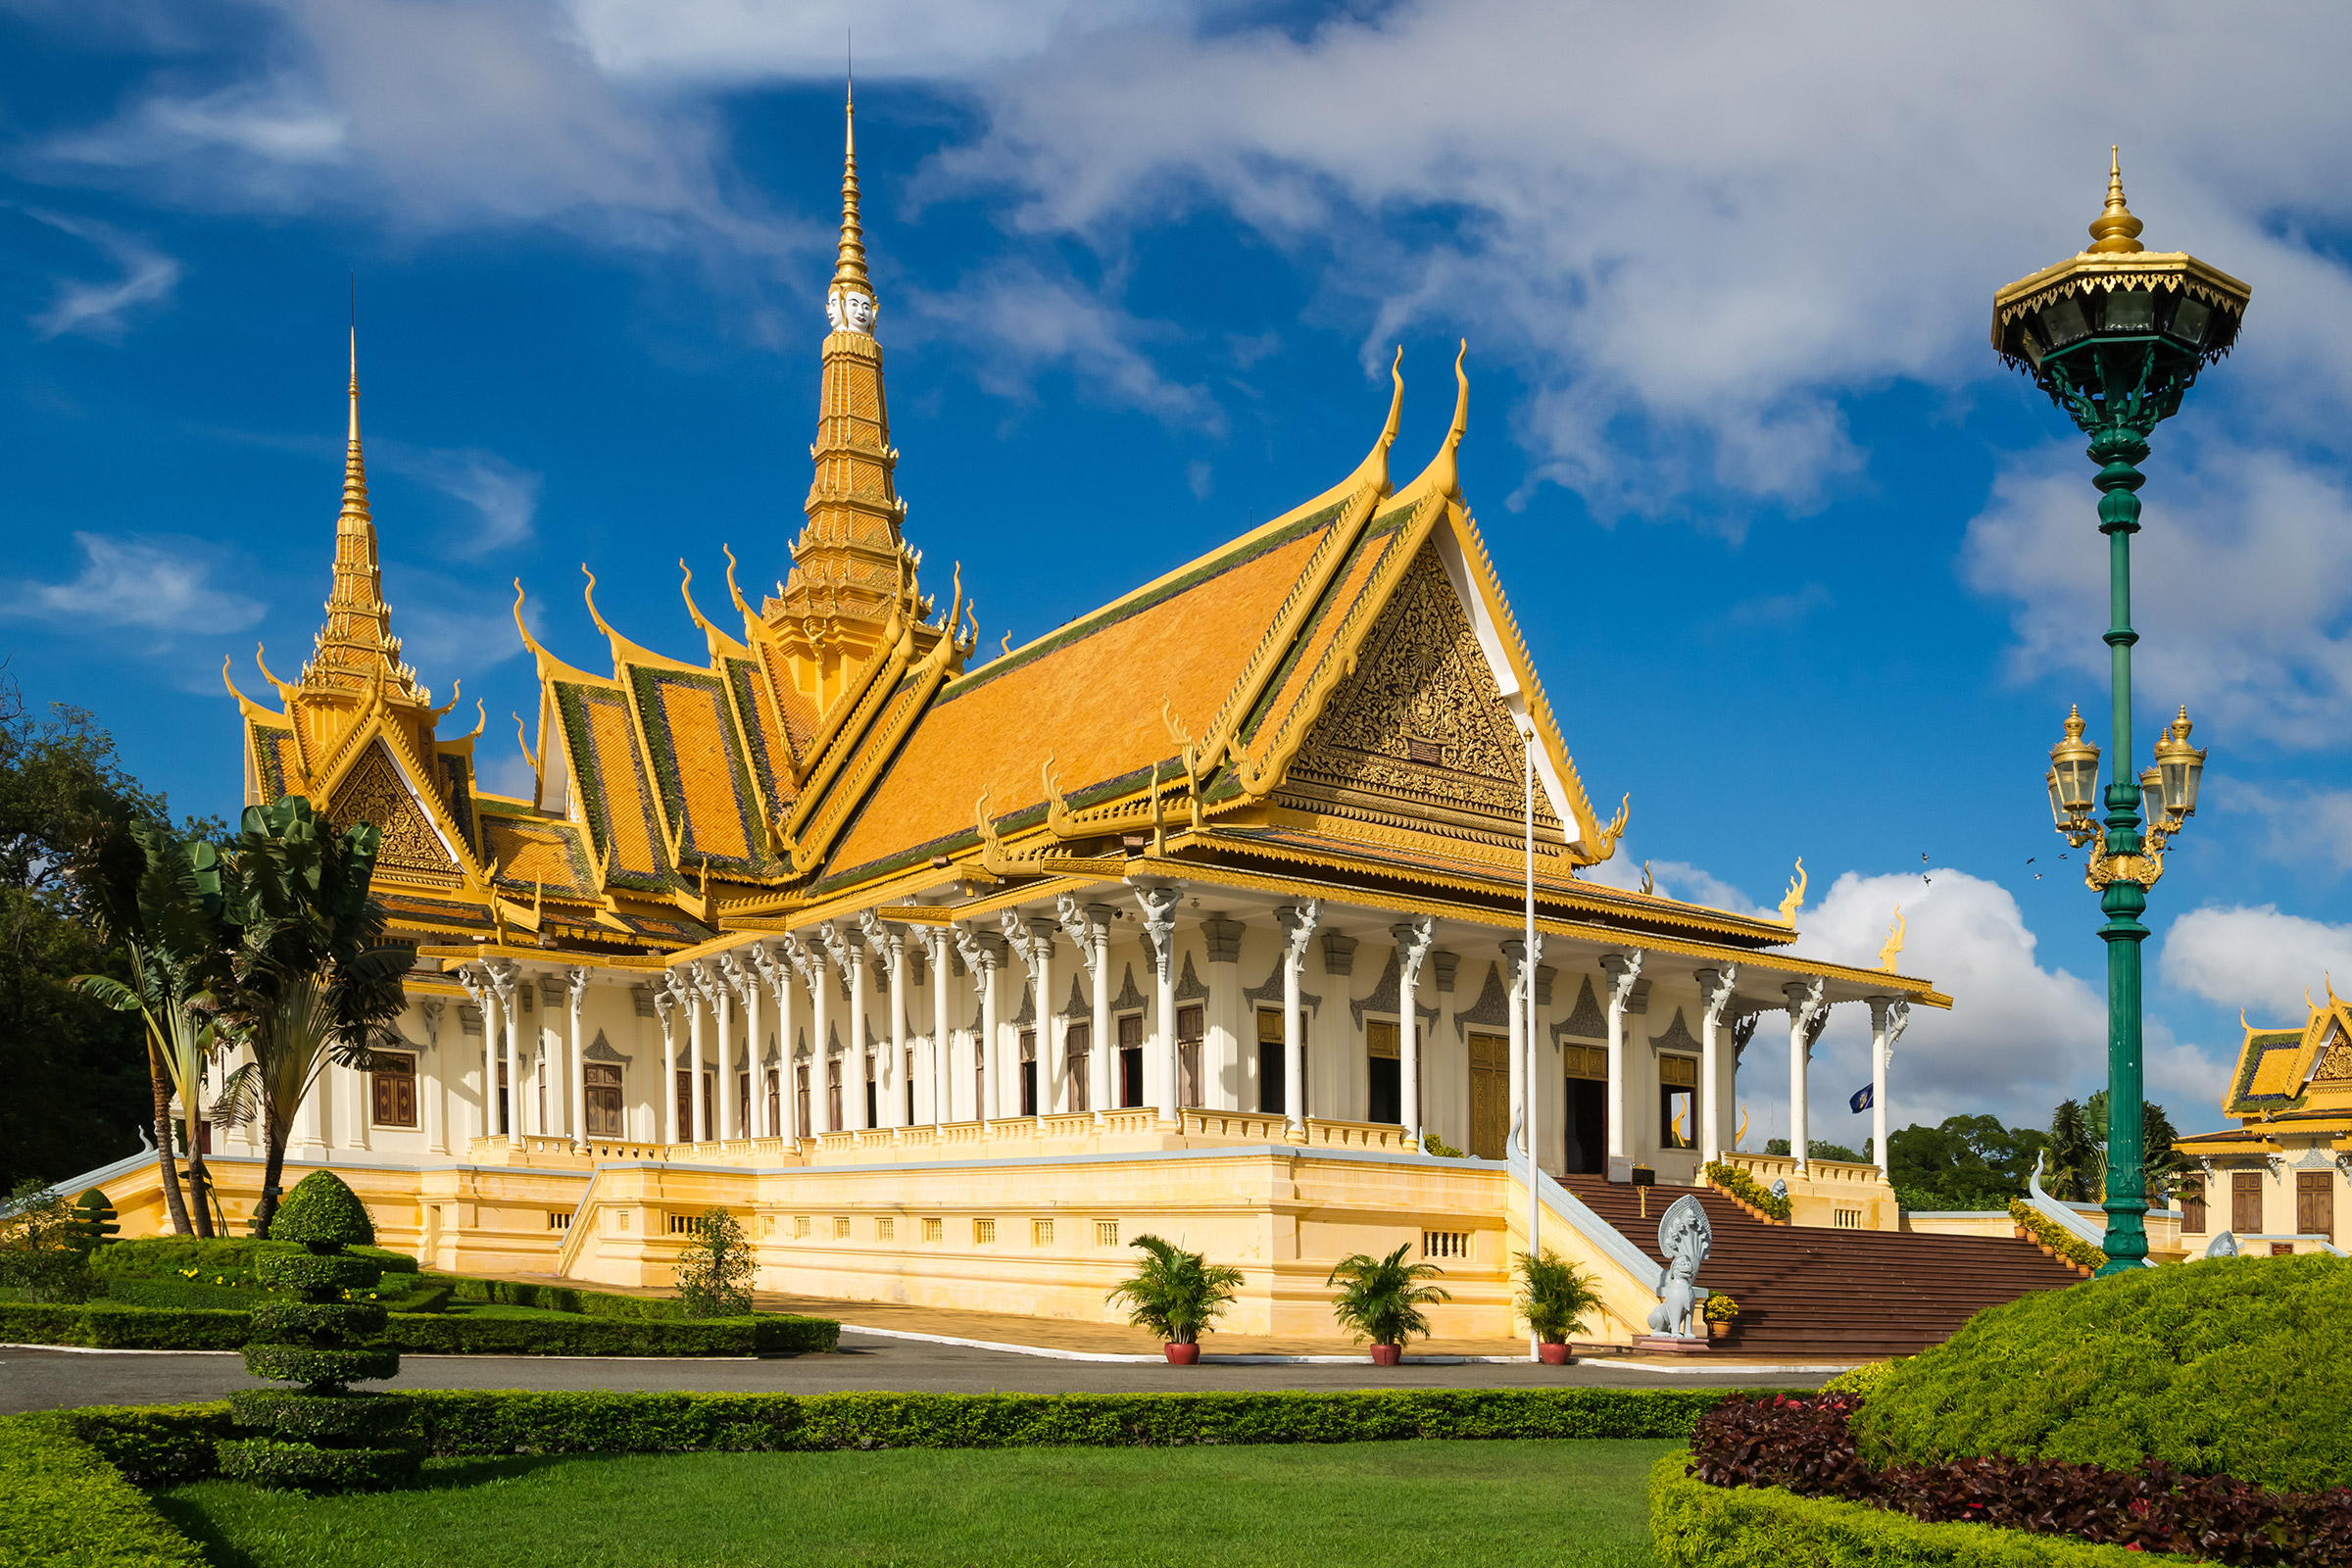 Cambodia Phnom Penh Royal Palace